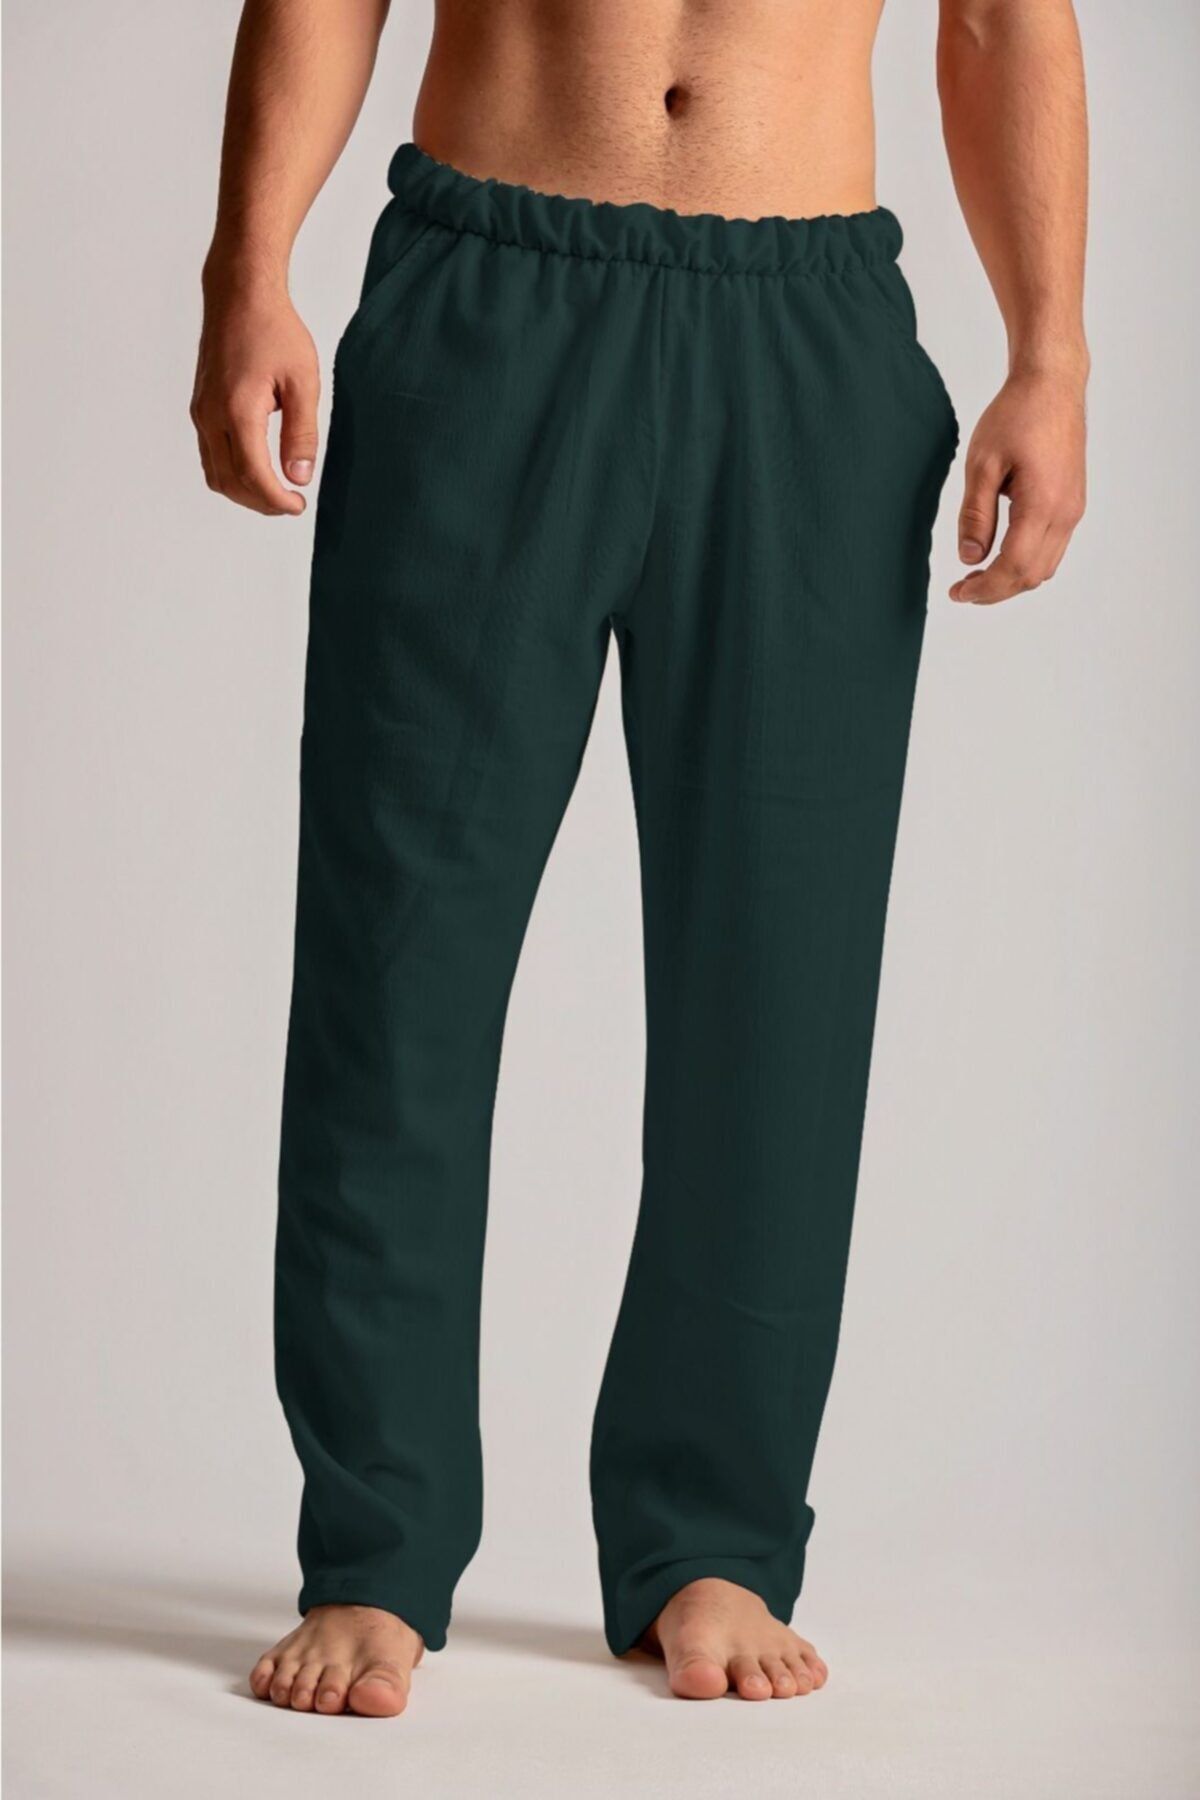 Botex %100 Pamuk Keten Erkek Pijama Altı - Koyu Yeşil